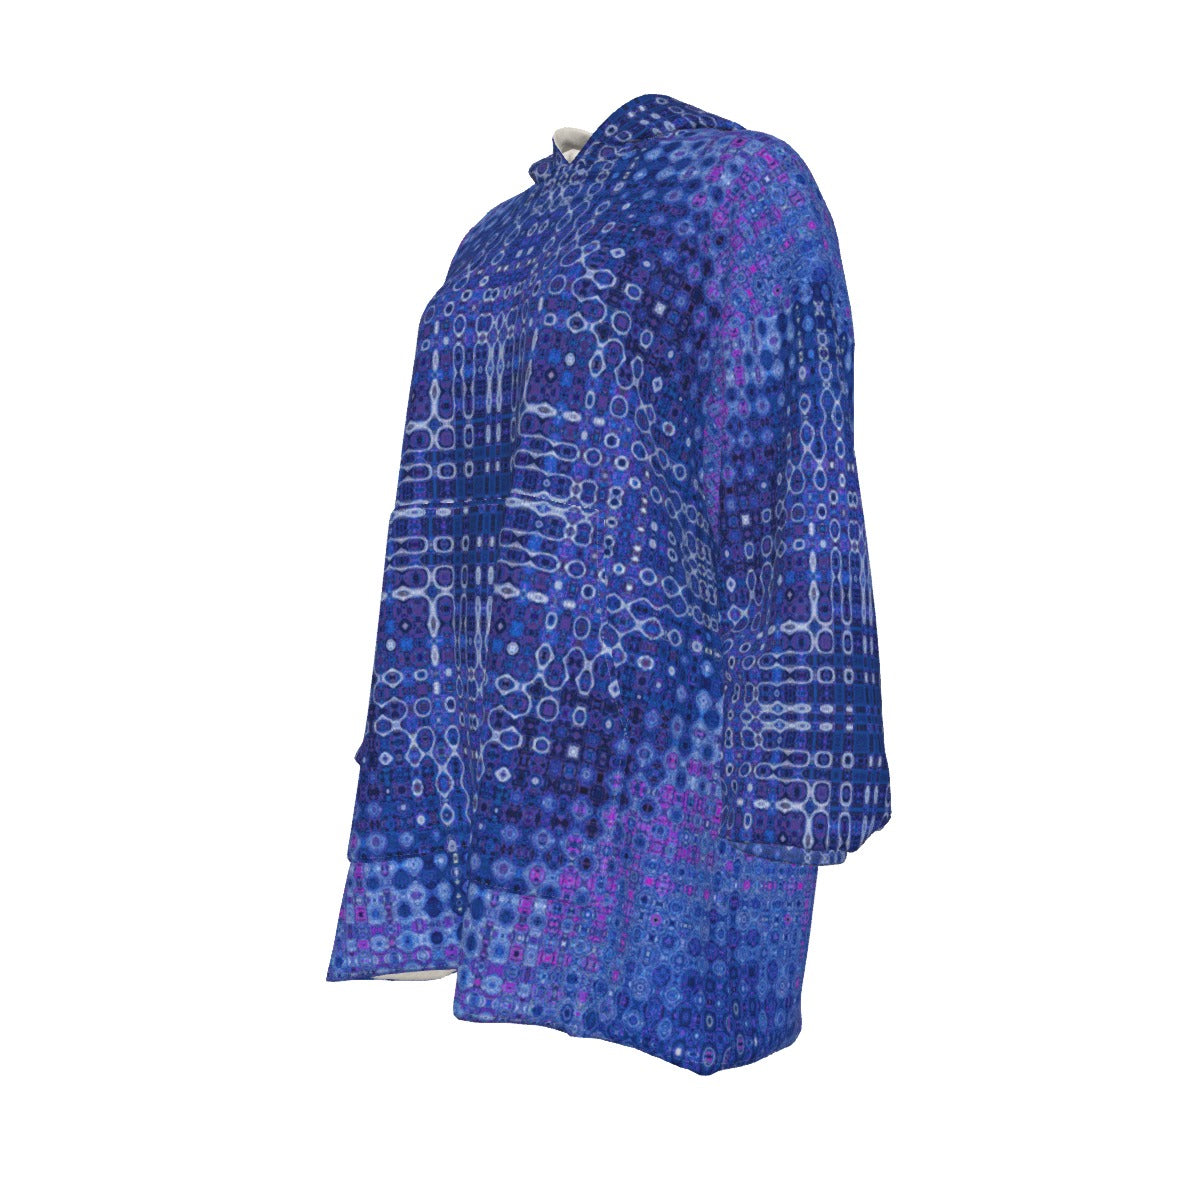 "Looped Circuits - Blue & Purple" Snuggle Bliss Oversized Sherpa Fleece Hoodie